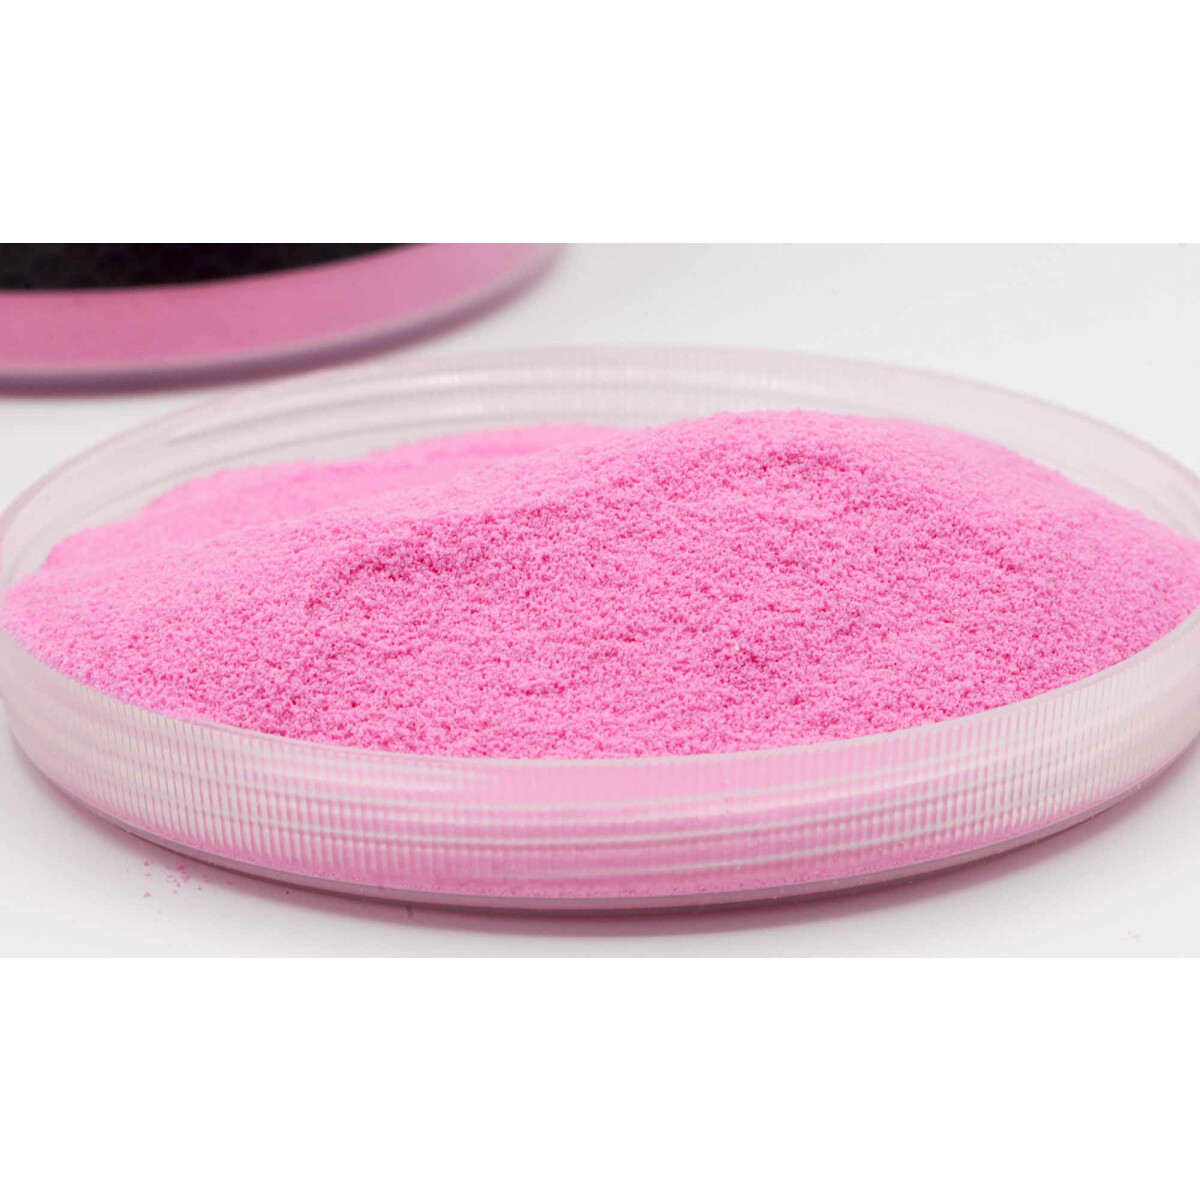 Carpleads Powder Coating - Pink